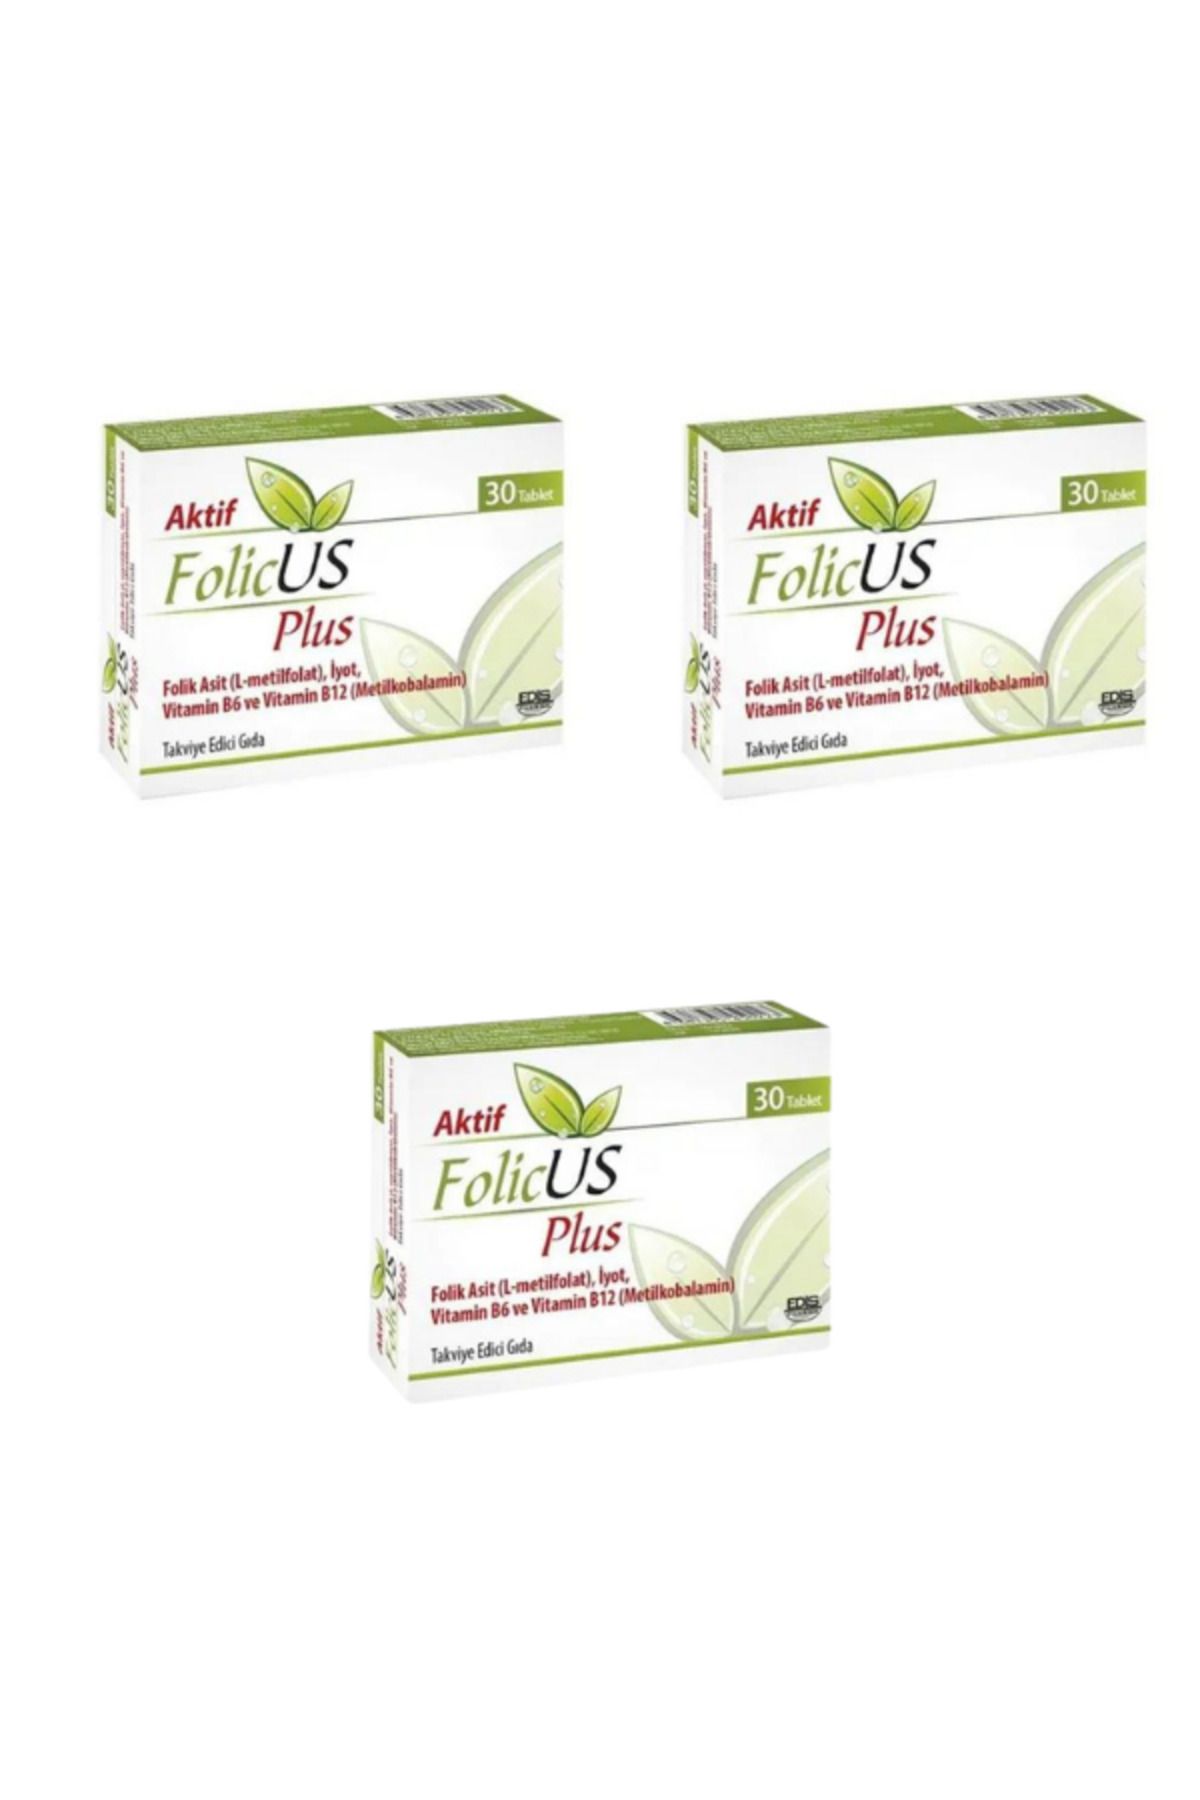 EDİS PHARMA Edis Pharma Folicus Plus Фолиевая кислота 30 таблеток 3 упаковки 45645645